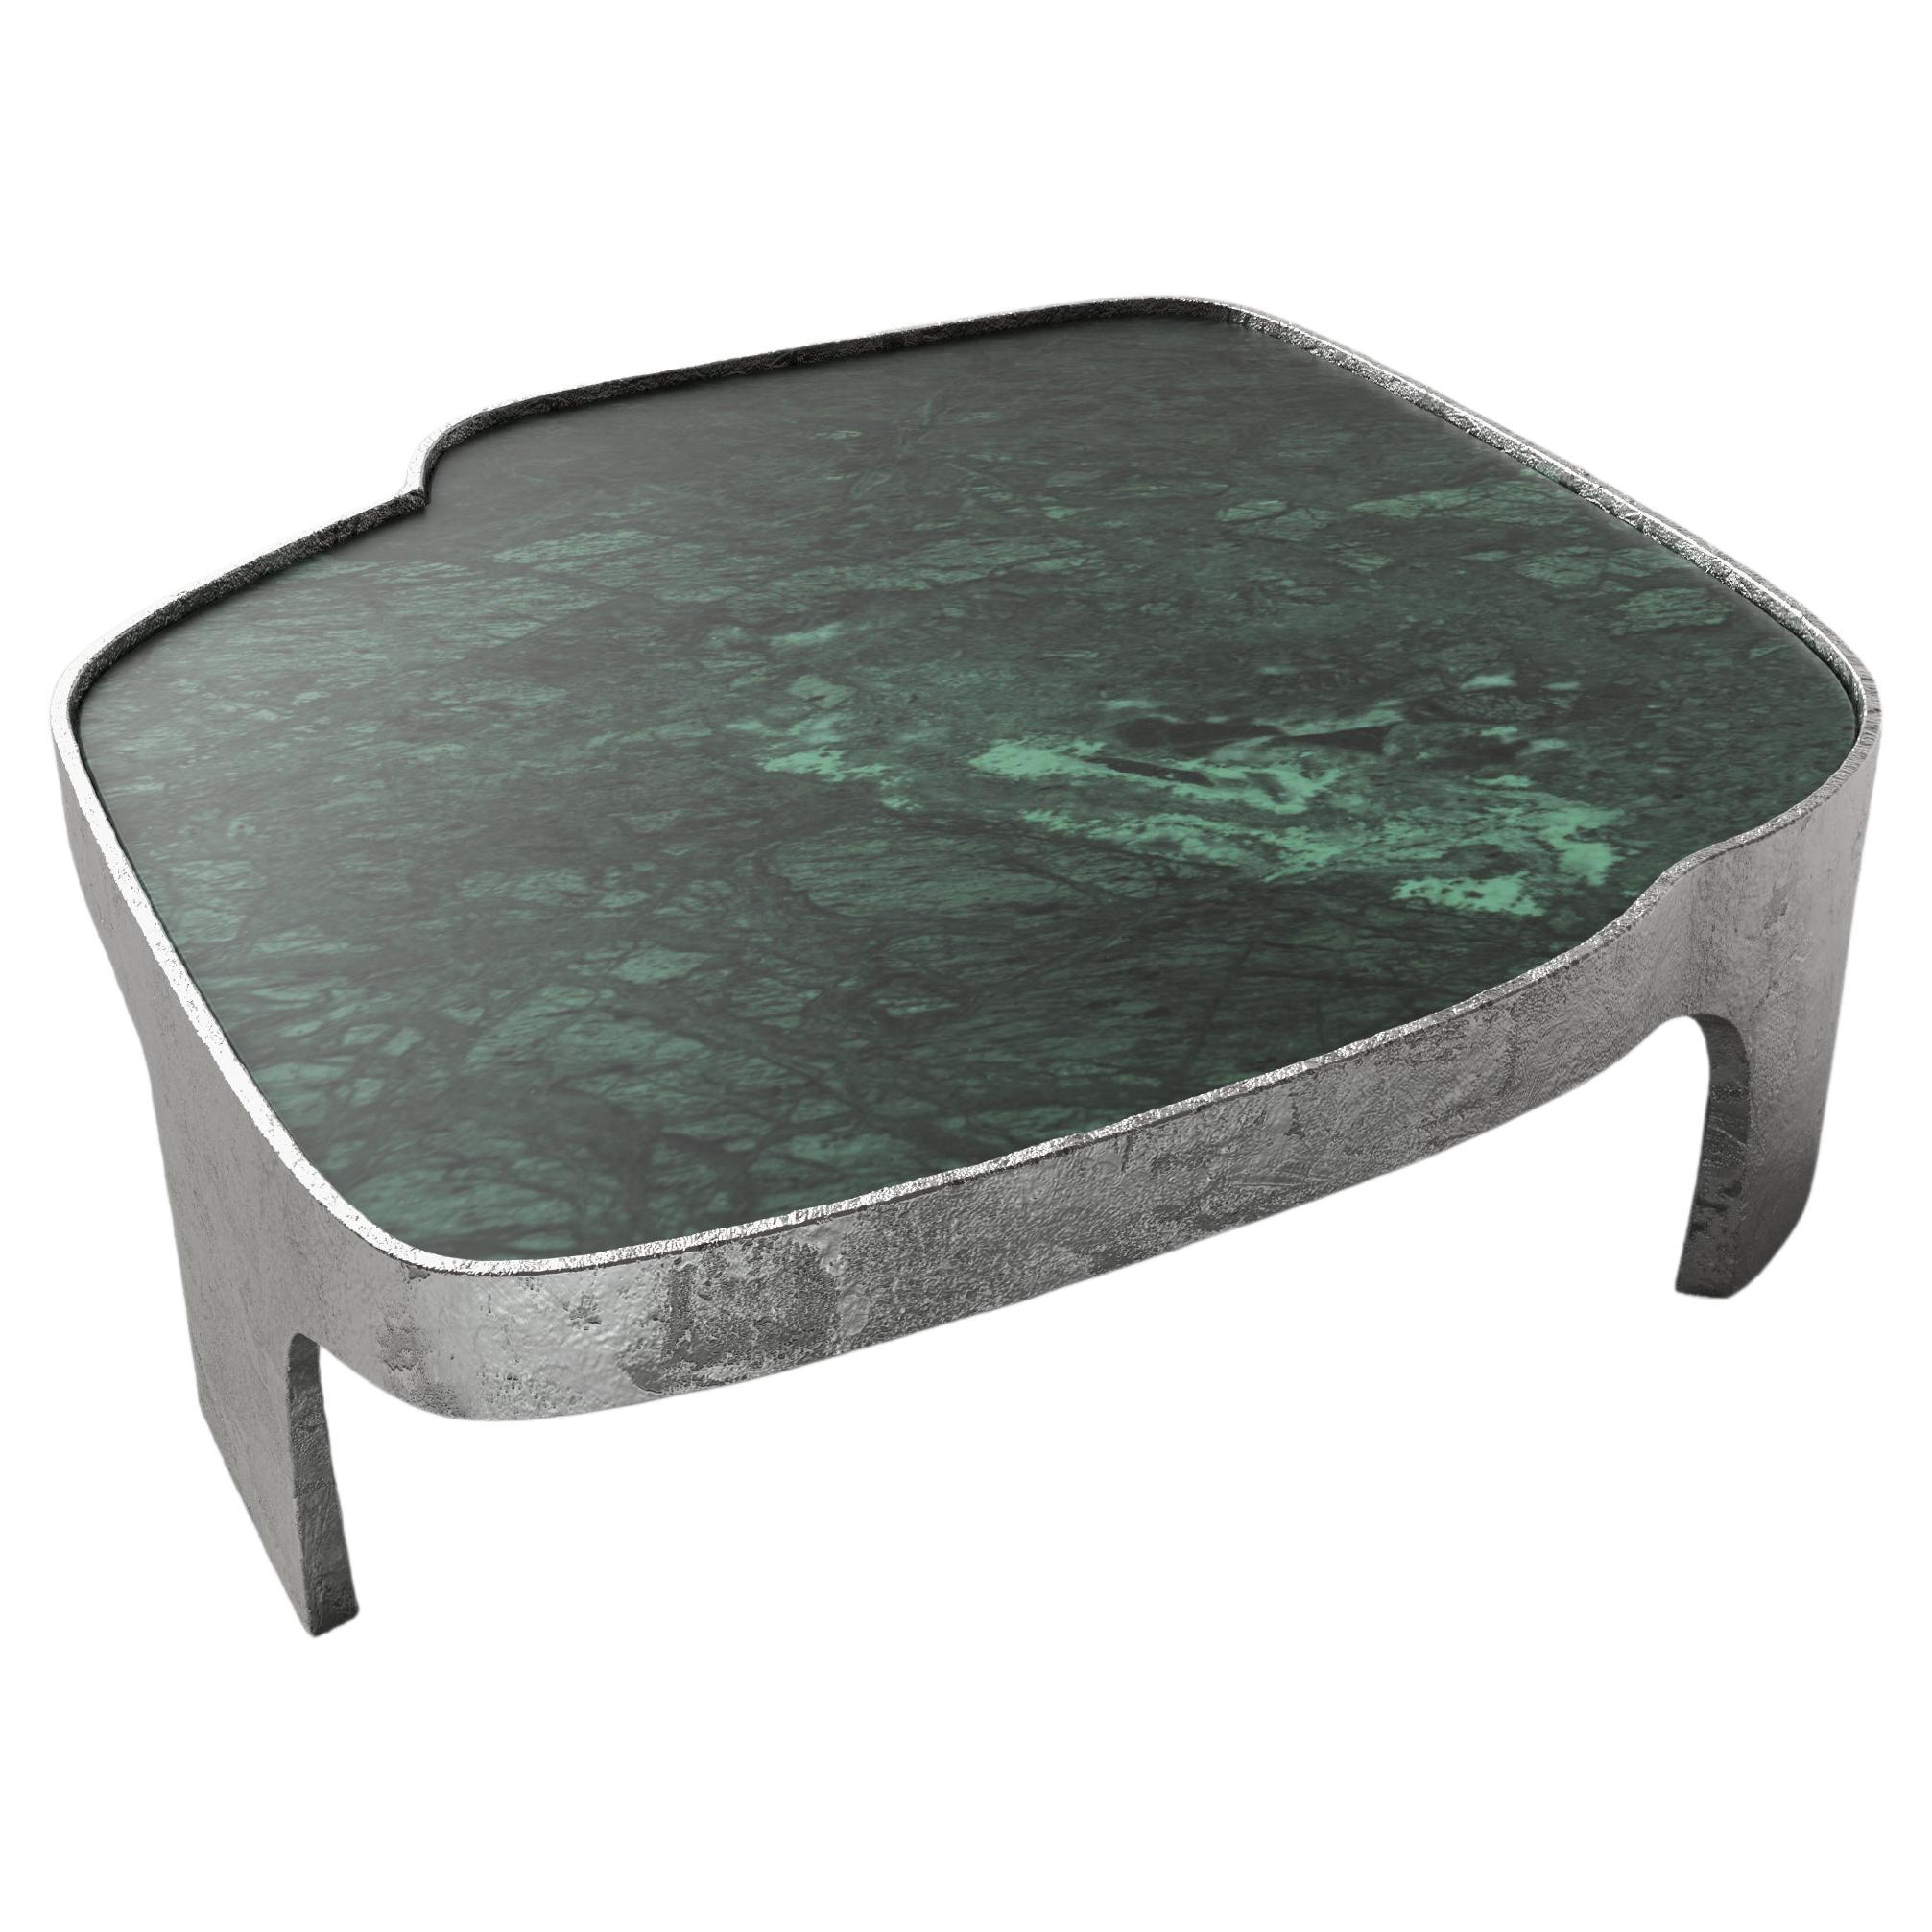 Limited Edition Marble Aluminium Table, Sumatra V2 by Edizione Limitata